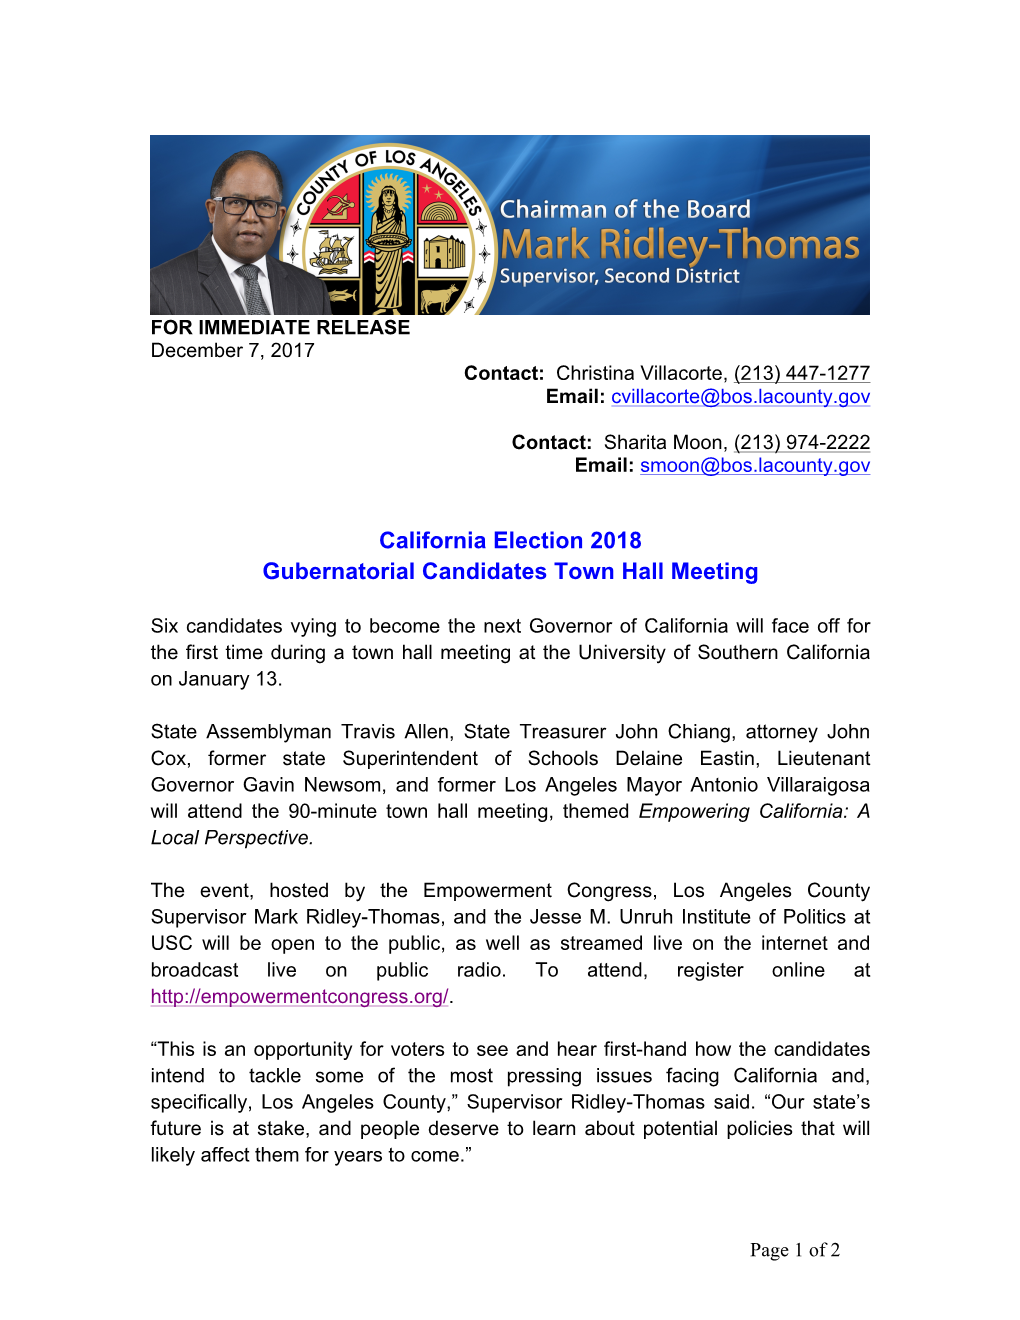 California Election 2018 Gubernatorial Candidates Town Hall Meeting